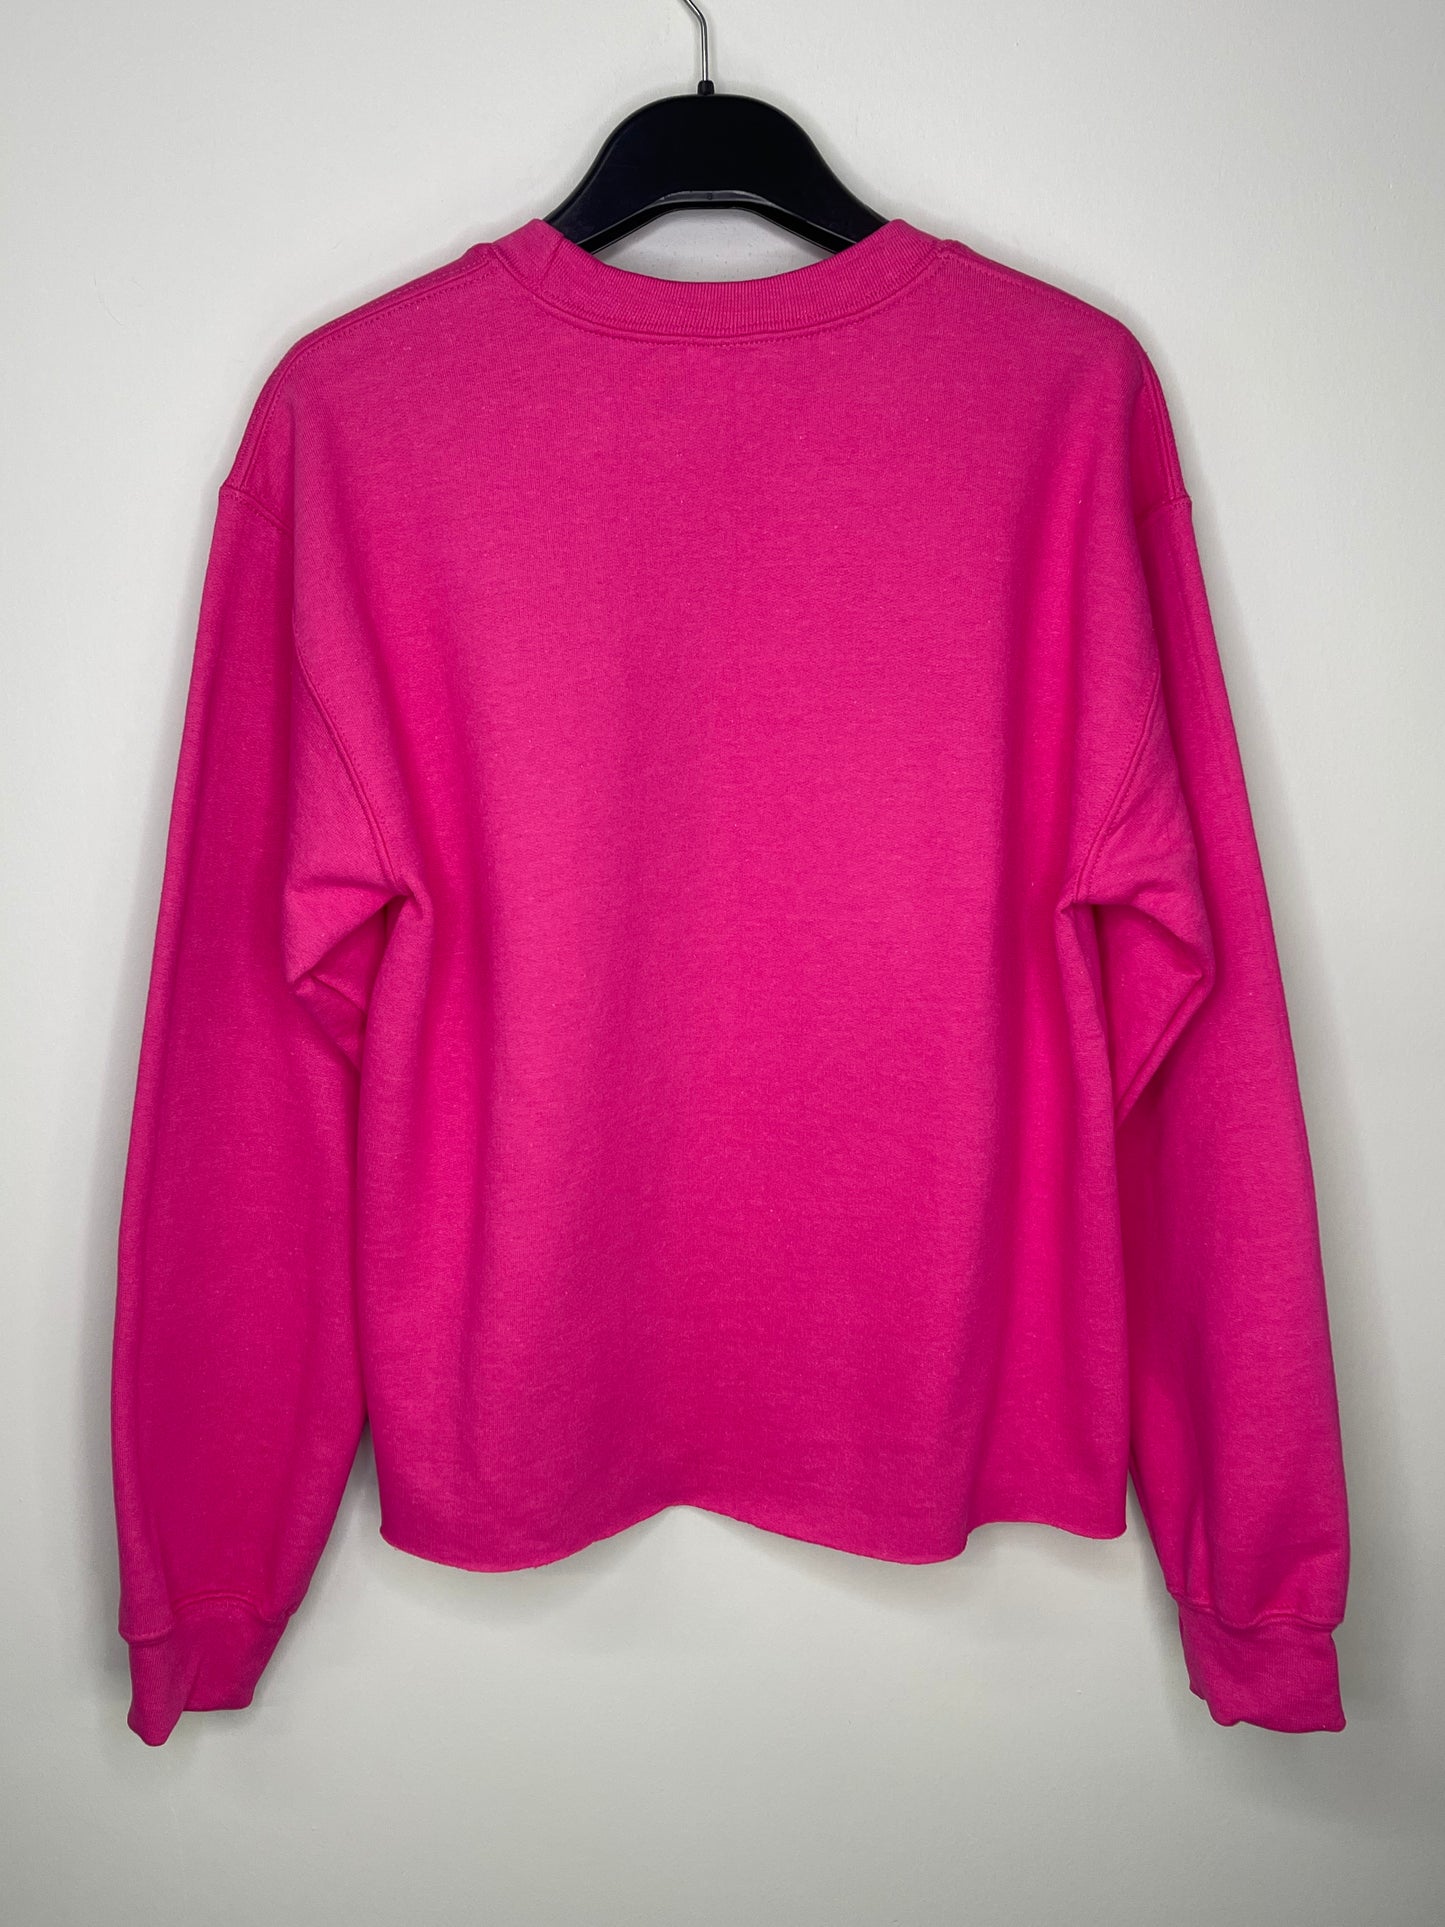 Sweatshirt, Crewneck Pink, Silver Crystal Bow